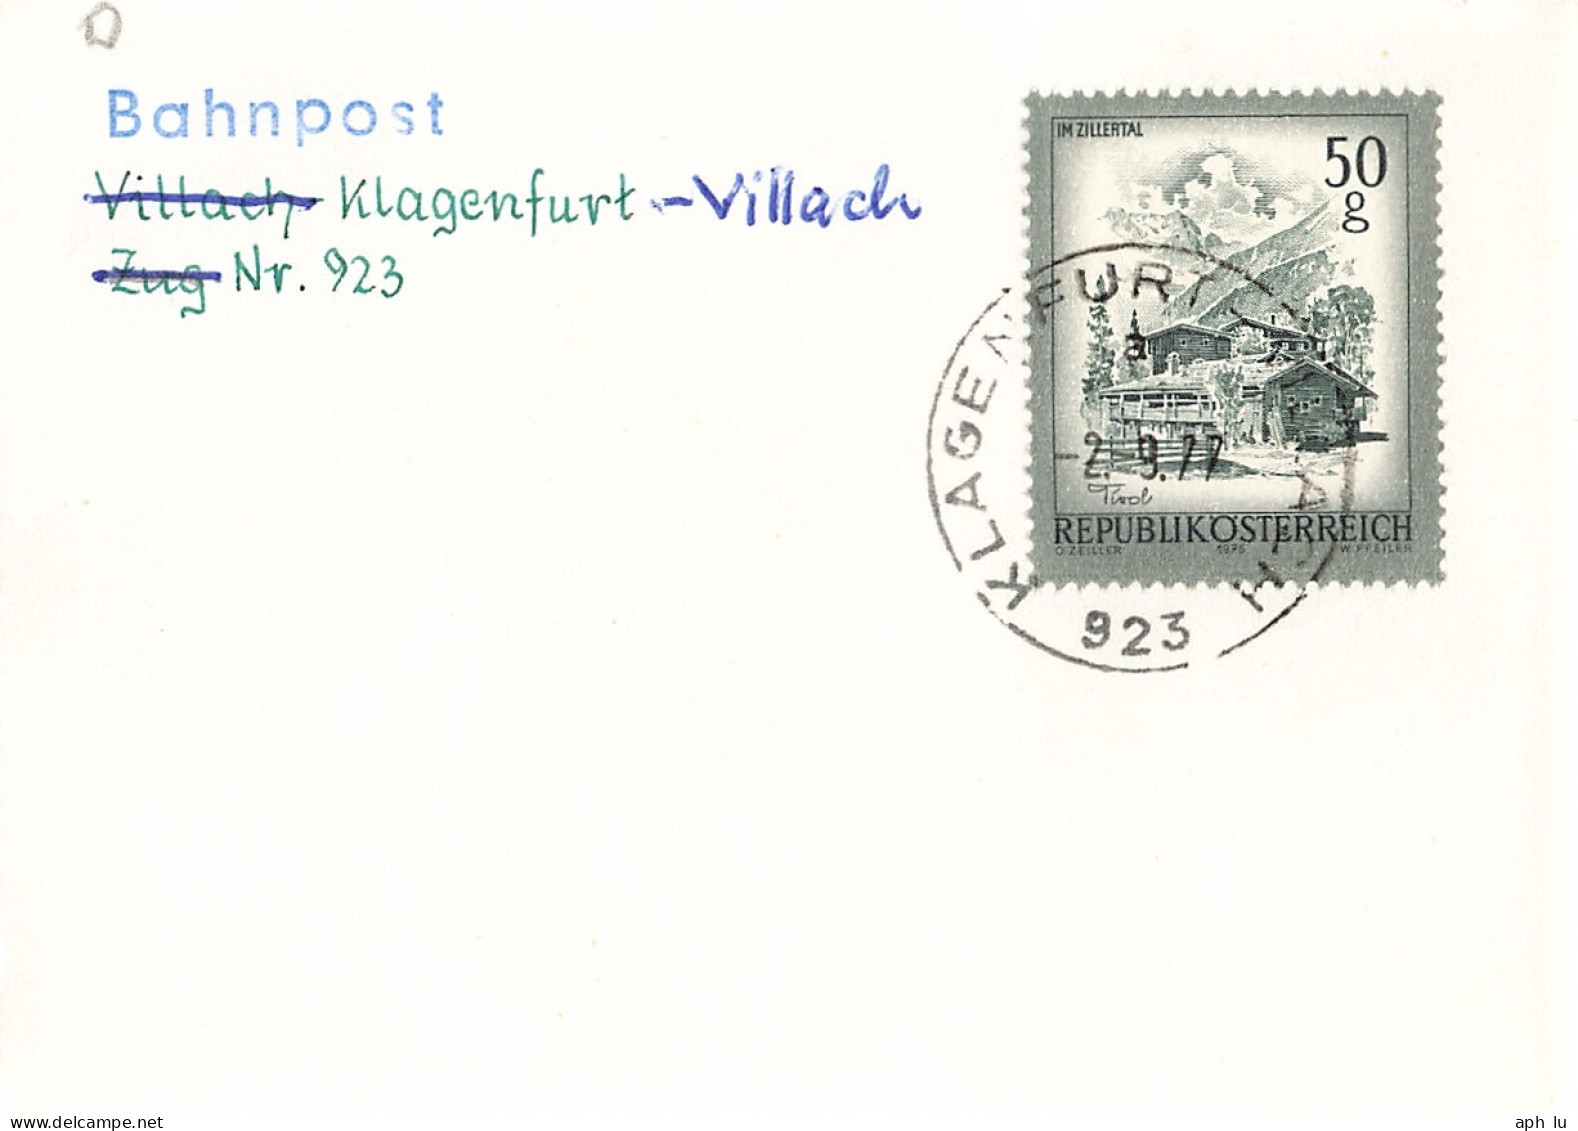 Bahnpost (R.P.O./T.P.O) Klagenfurt-Villach [Ausschnitt] (AD3098) - Covers & Documents